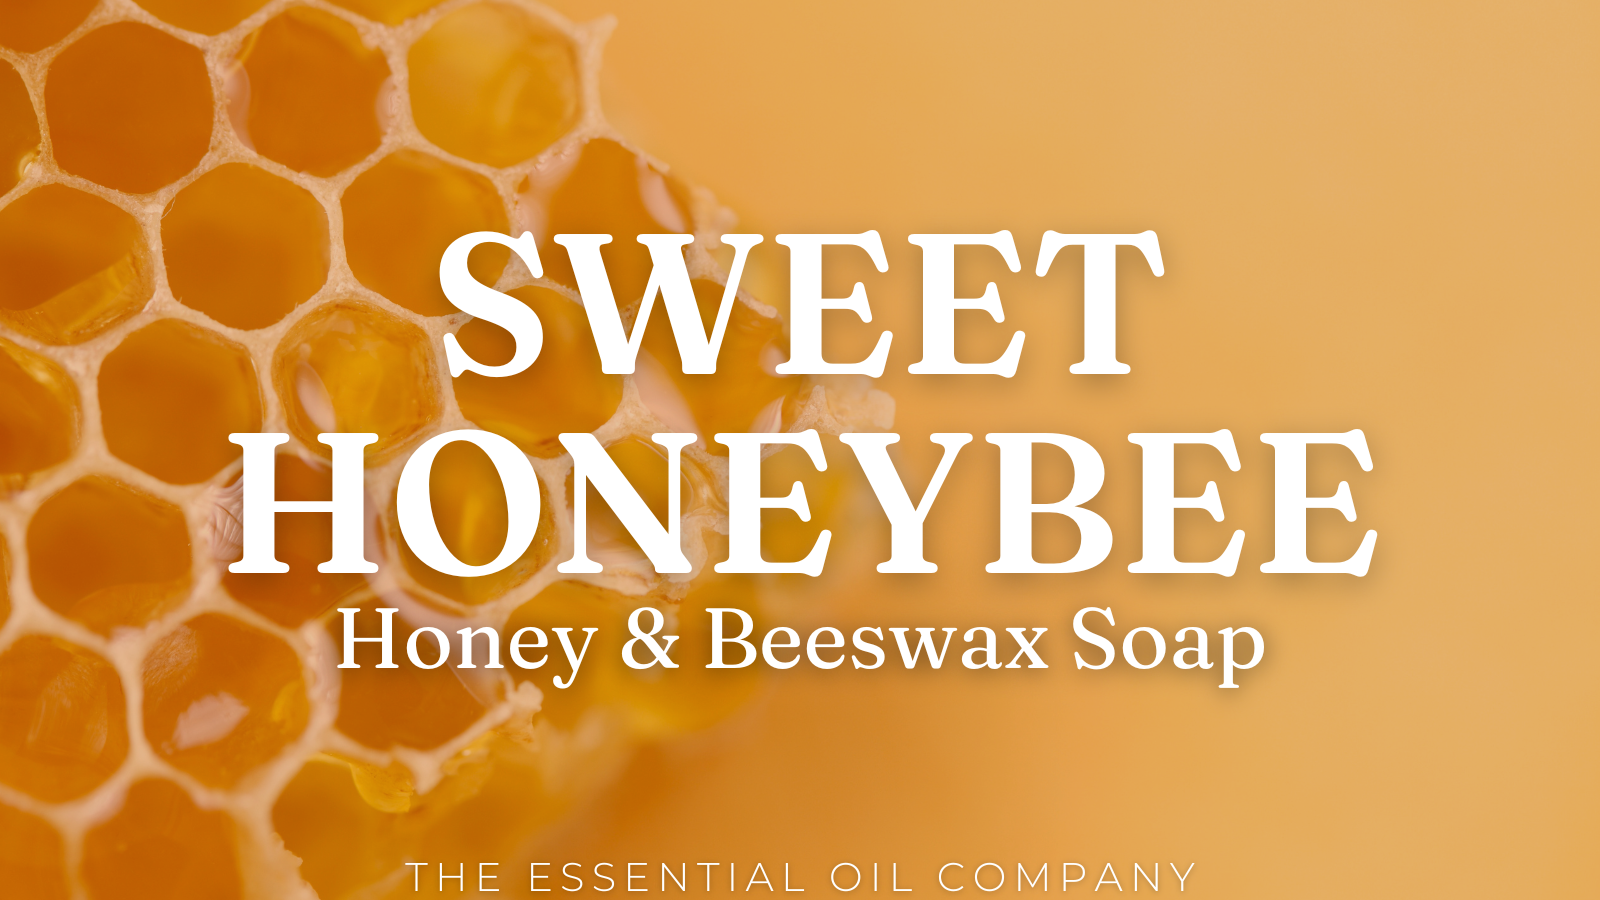 Sweet Honeybee: Honey & Beeswax Soap